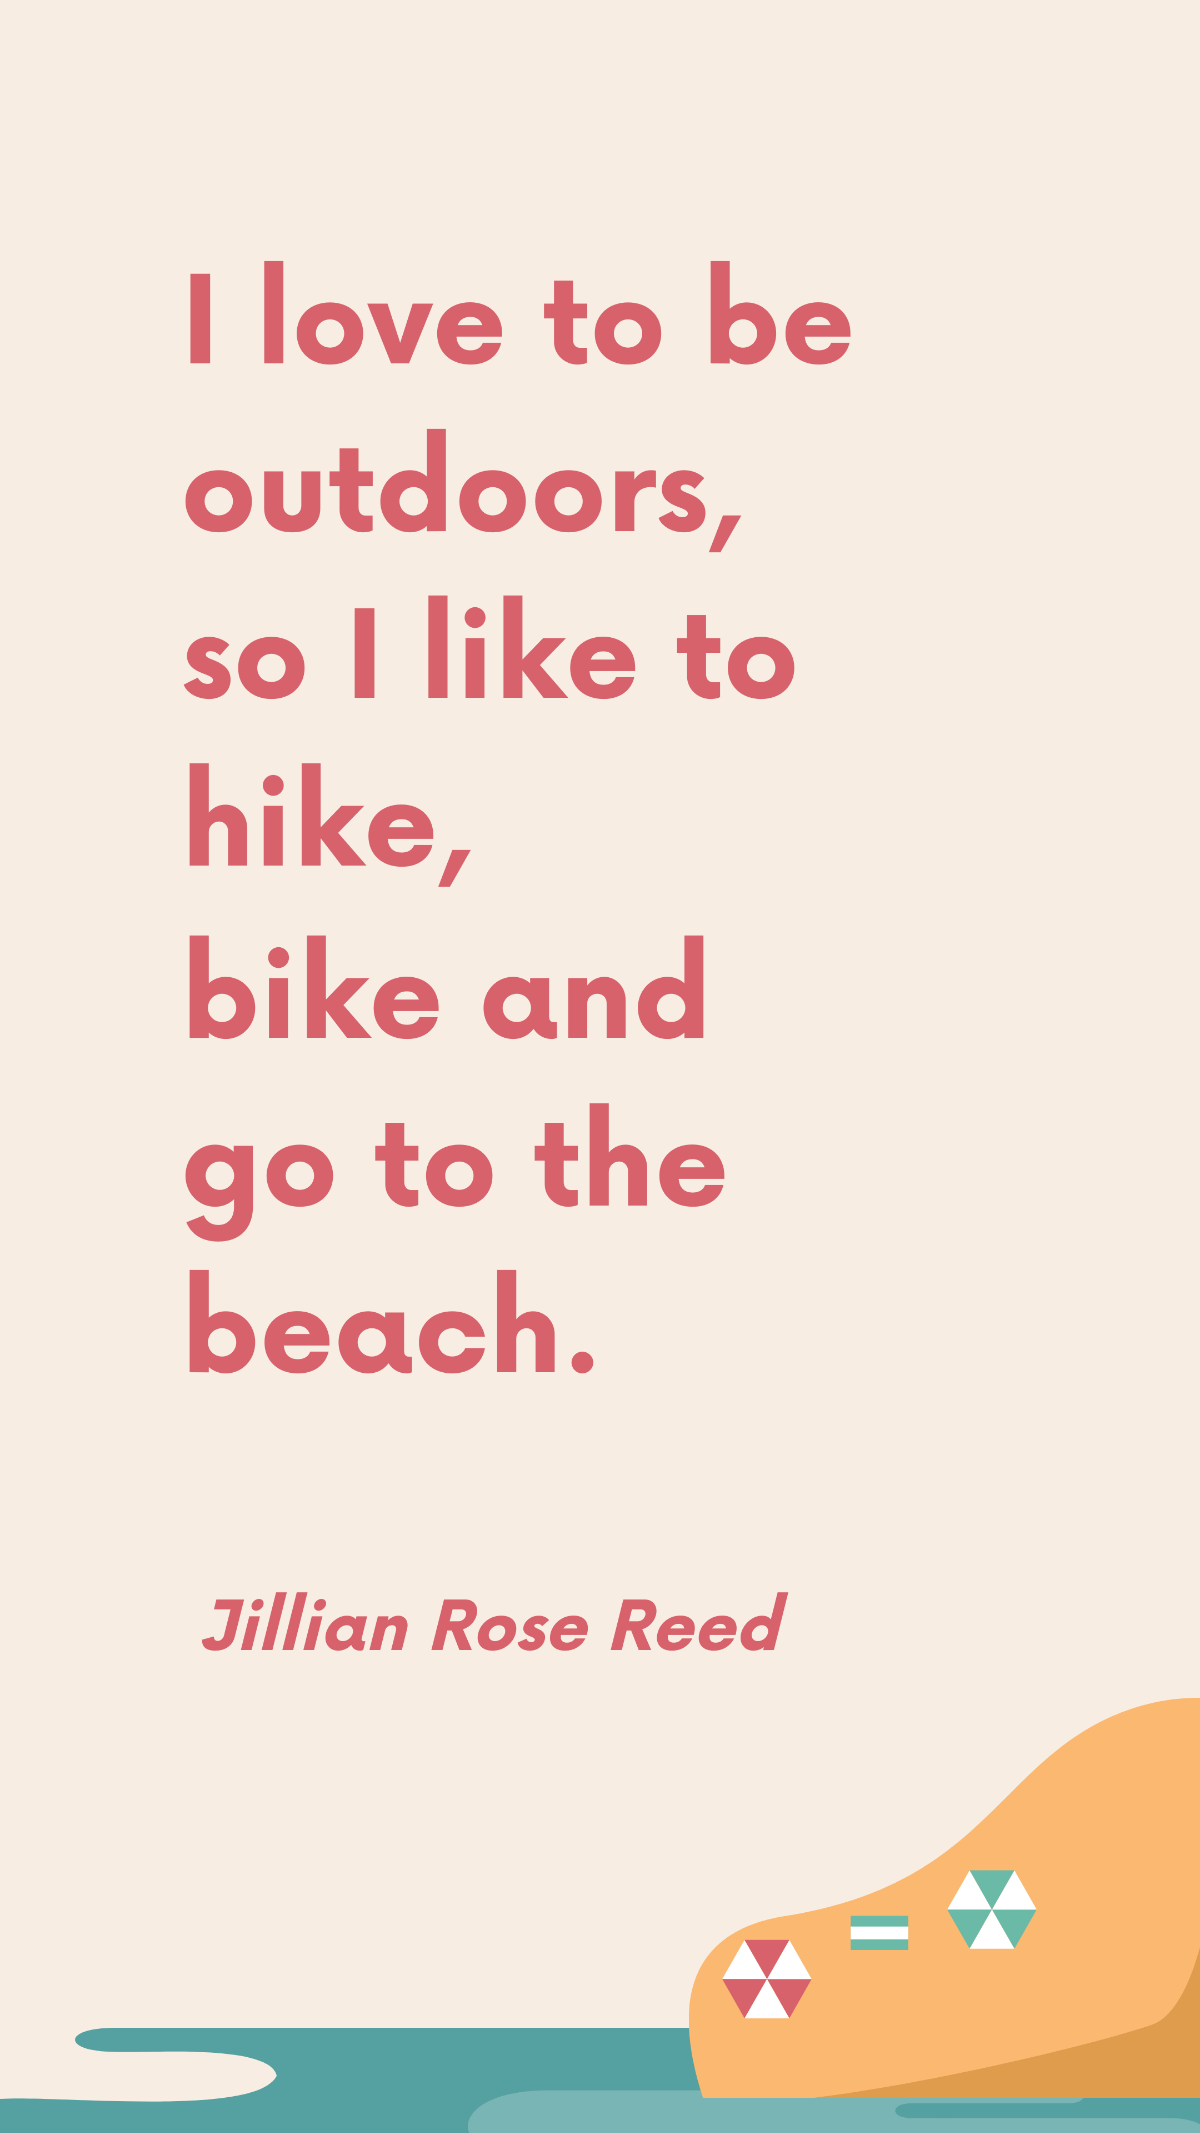 Jillian Rose Reed - I love to be outdoors, so I like to hike, bike and go to the beach.